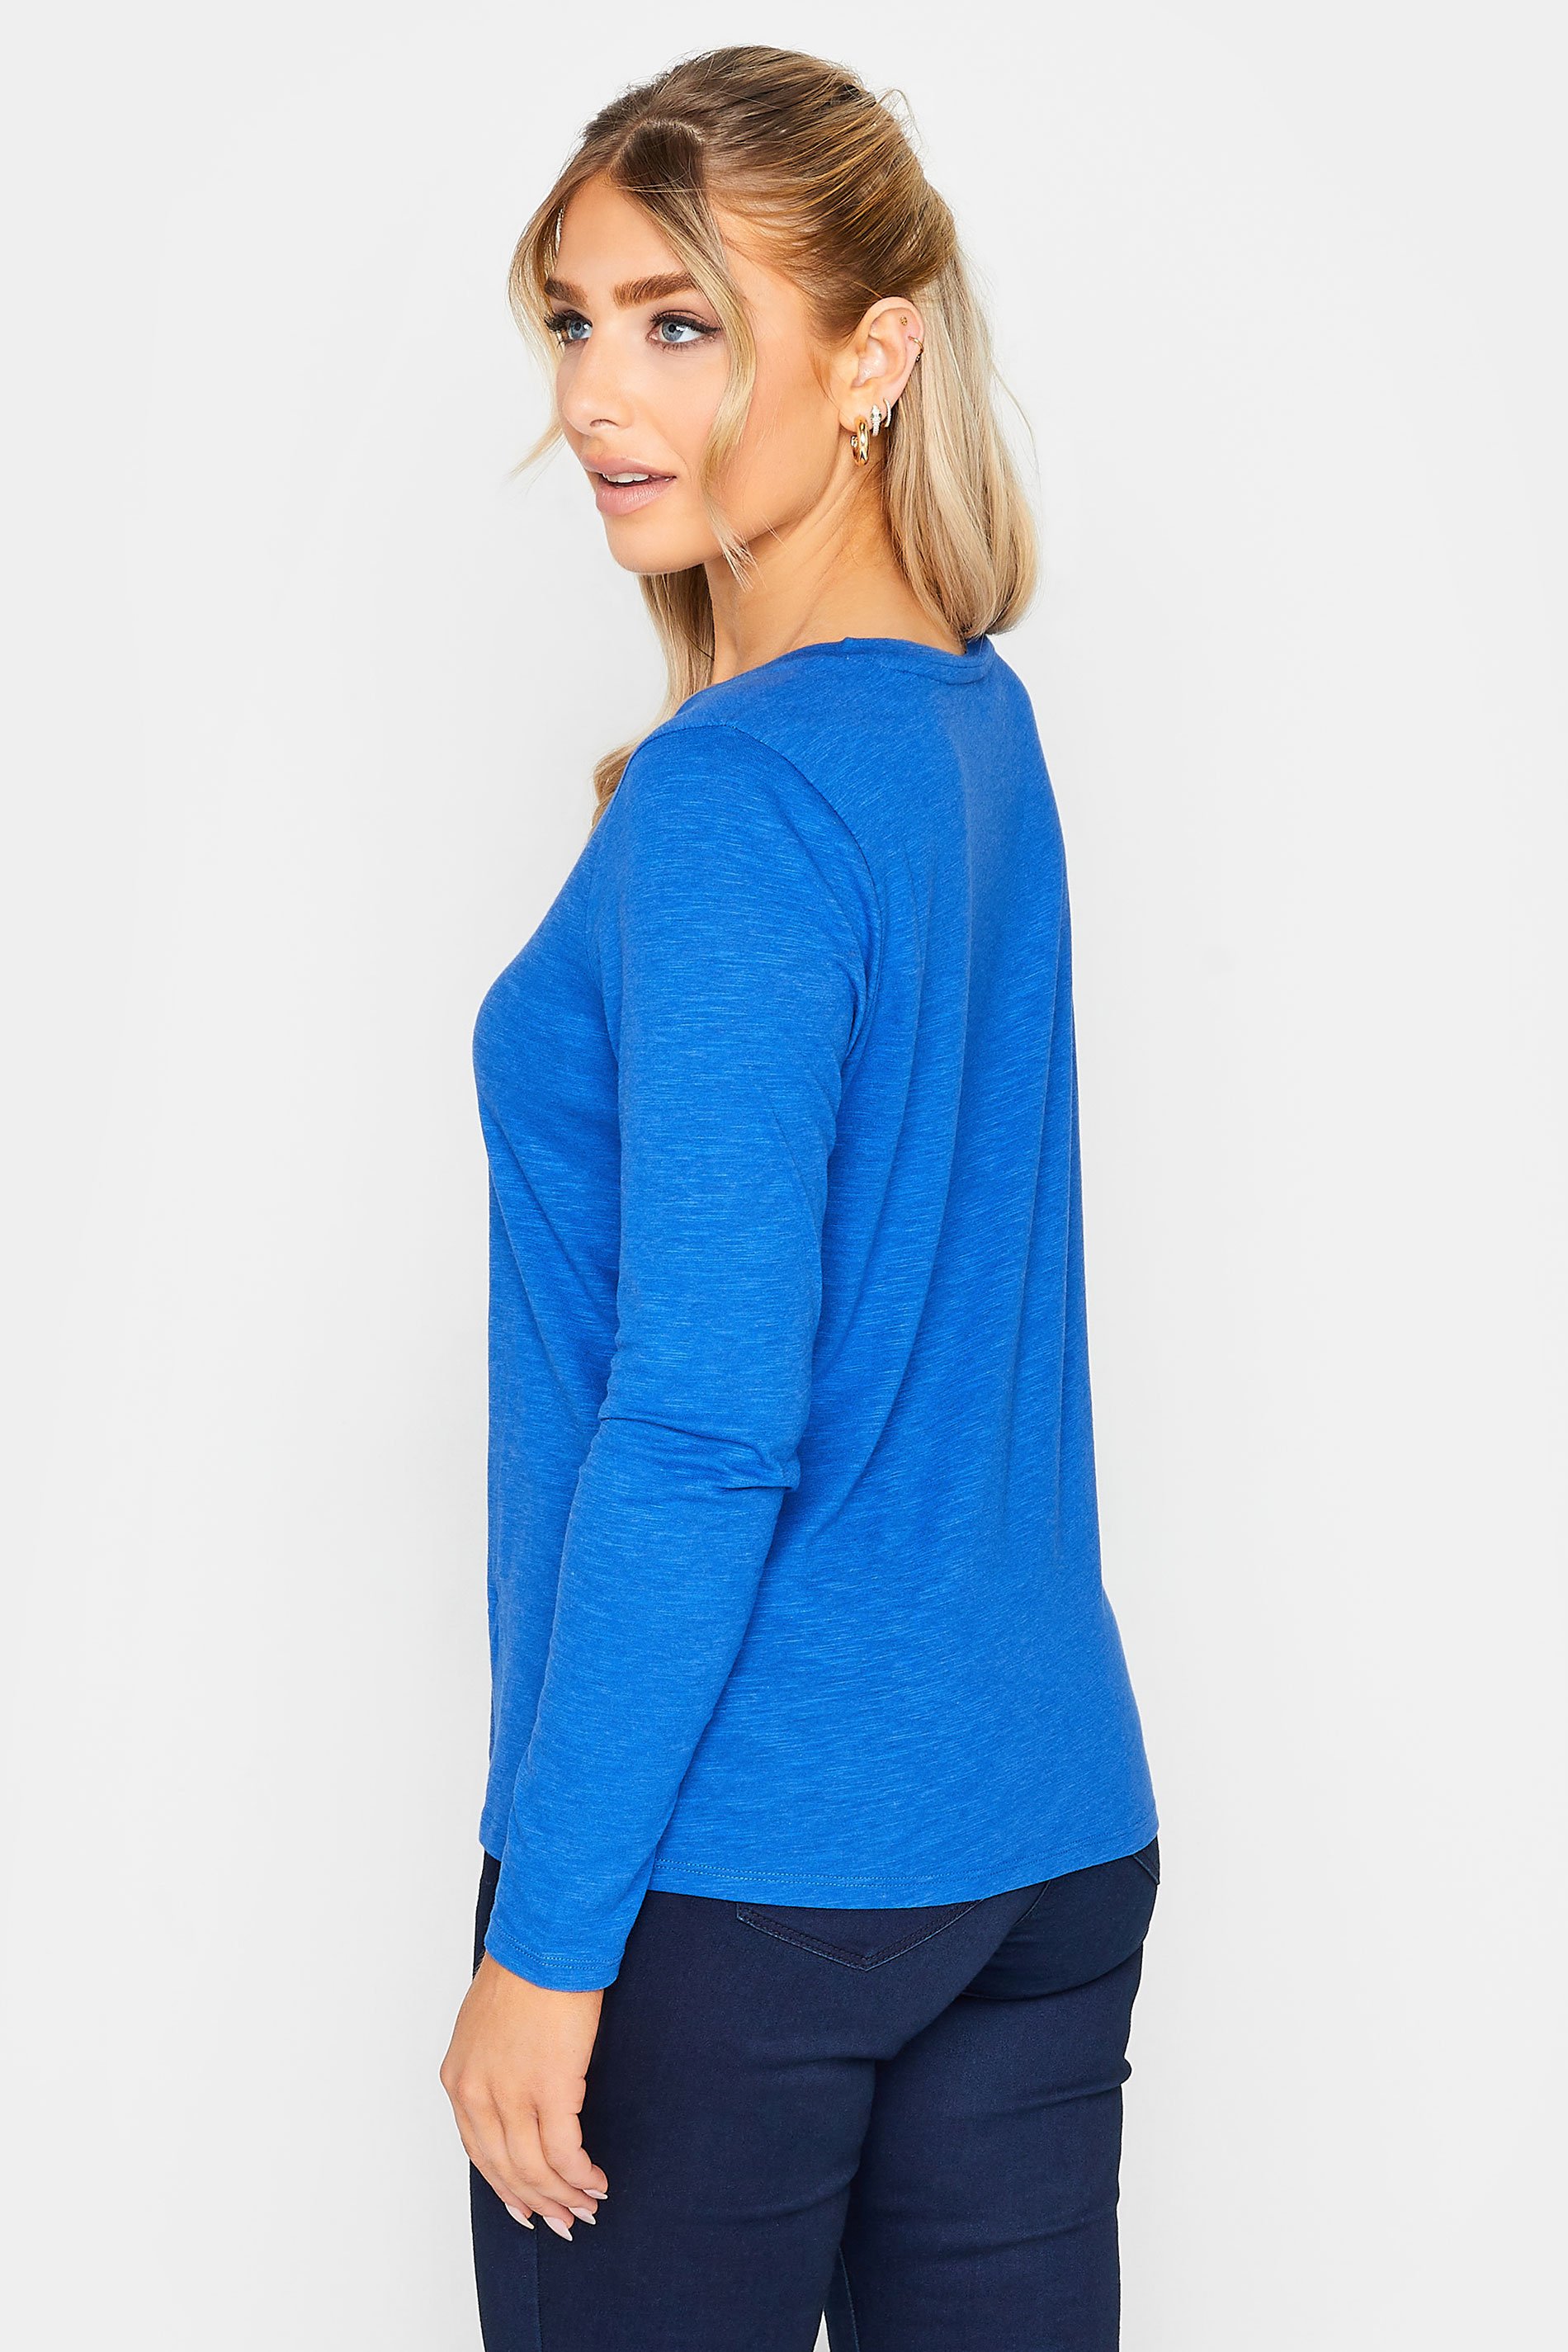 M&Co Blue V-Neck Long Sleeve Cotton T-Shirt | M&Co 3